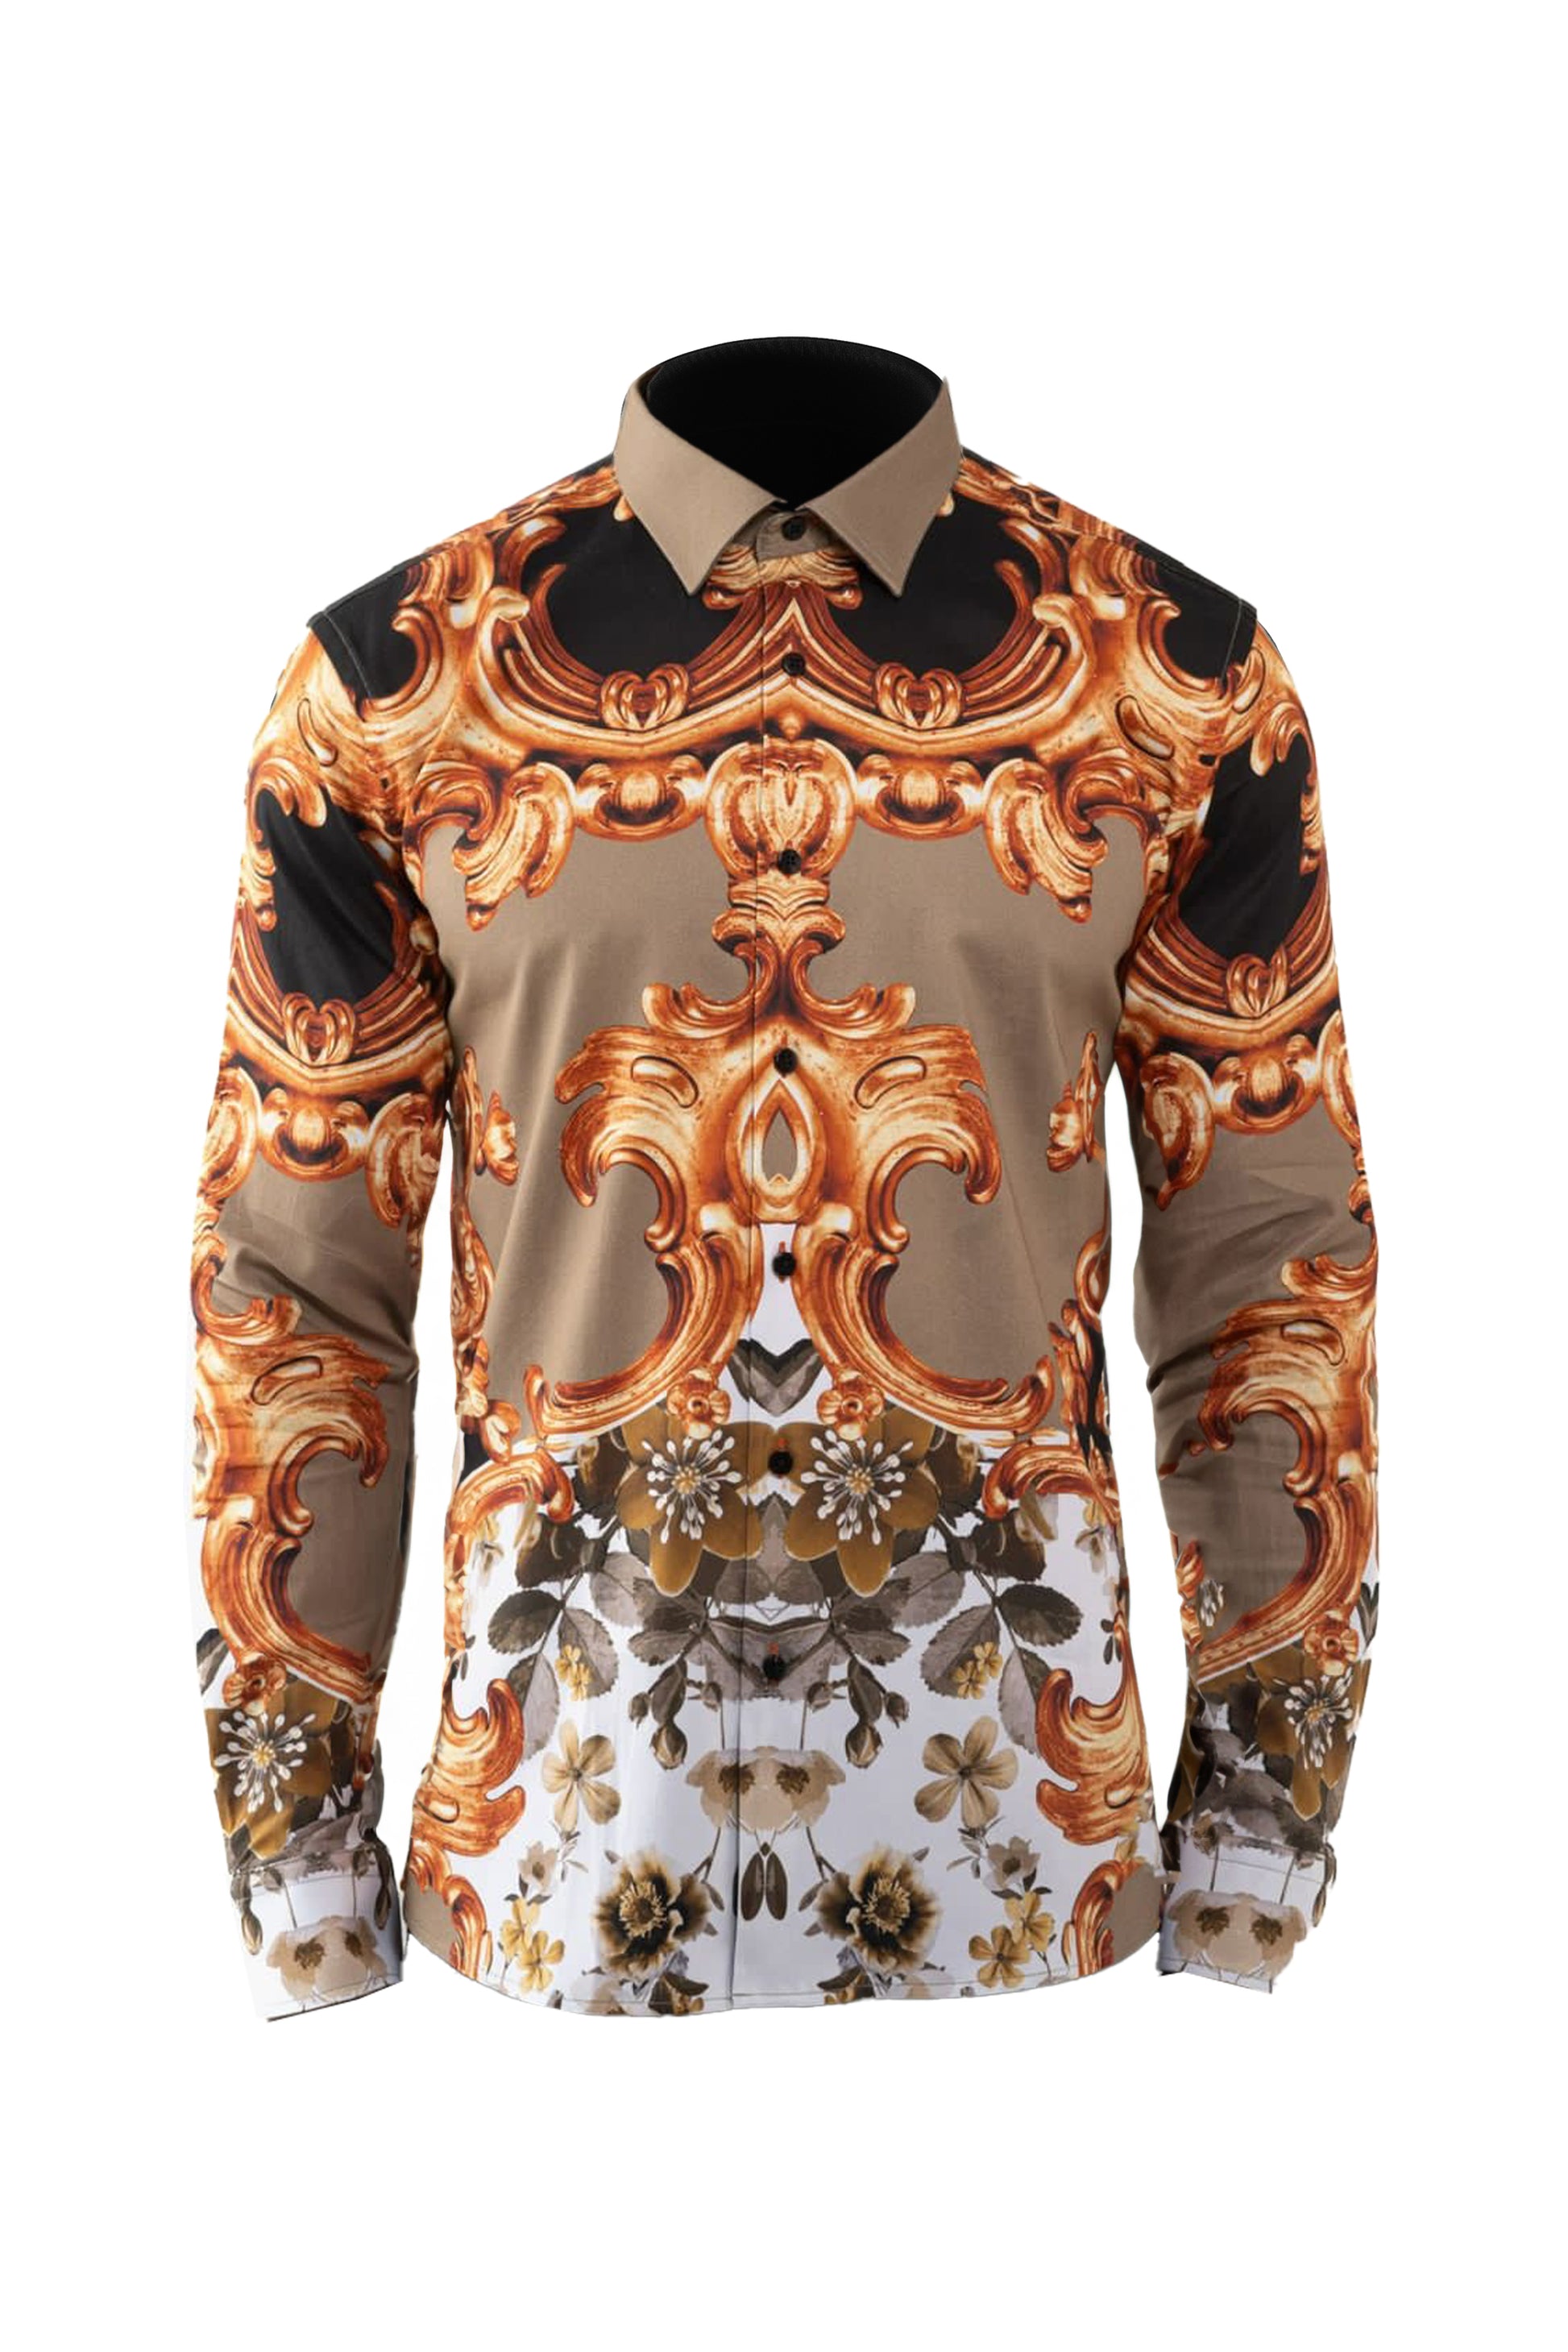 Baroque Brilliance Cotton Men's Casual Shirt CASUAL SHIRT On Sale 30% Off Vercini